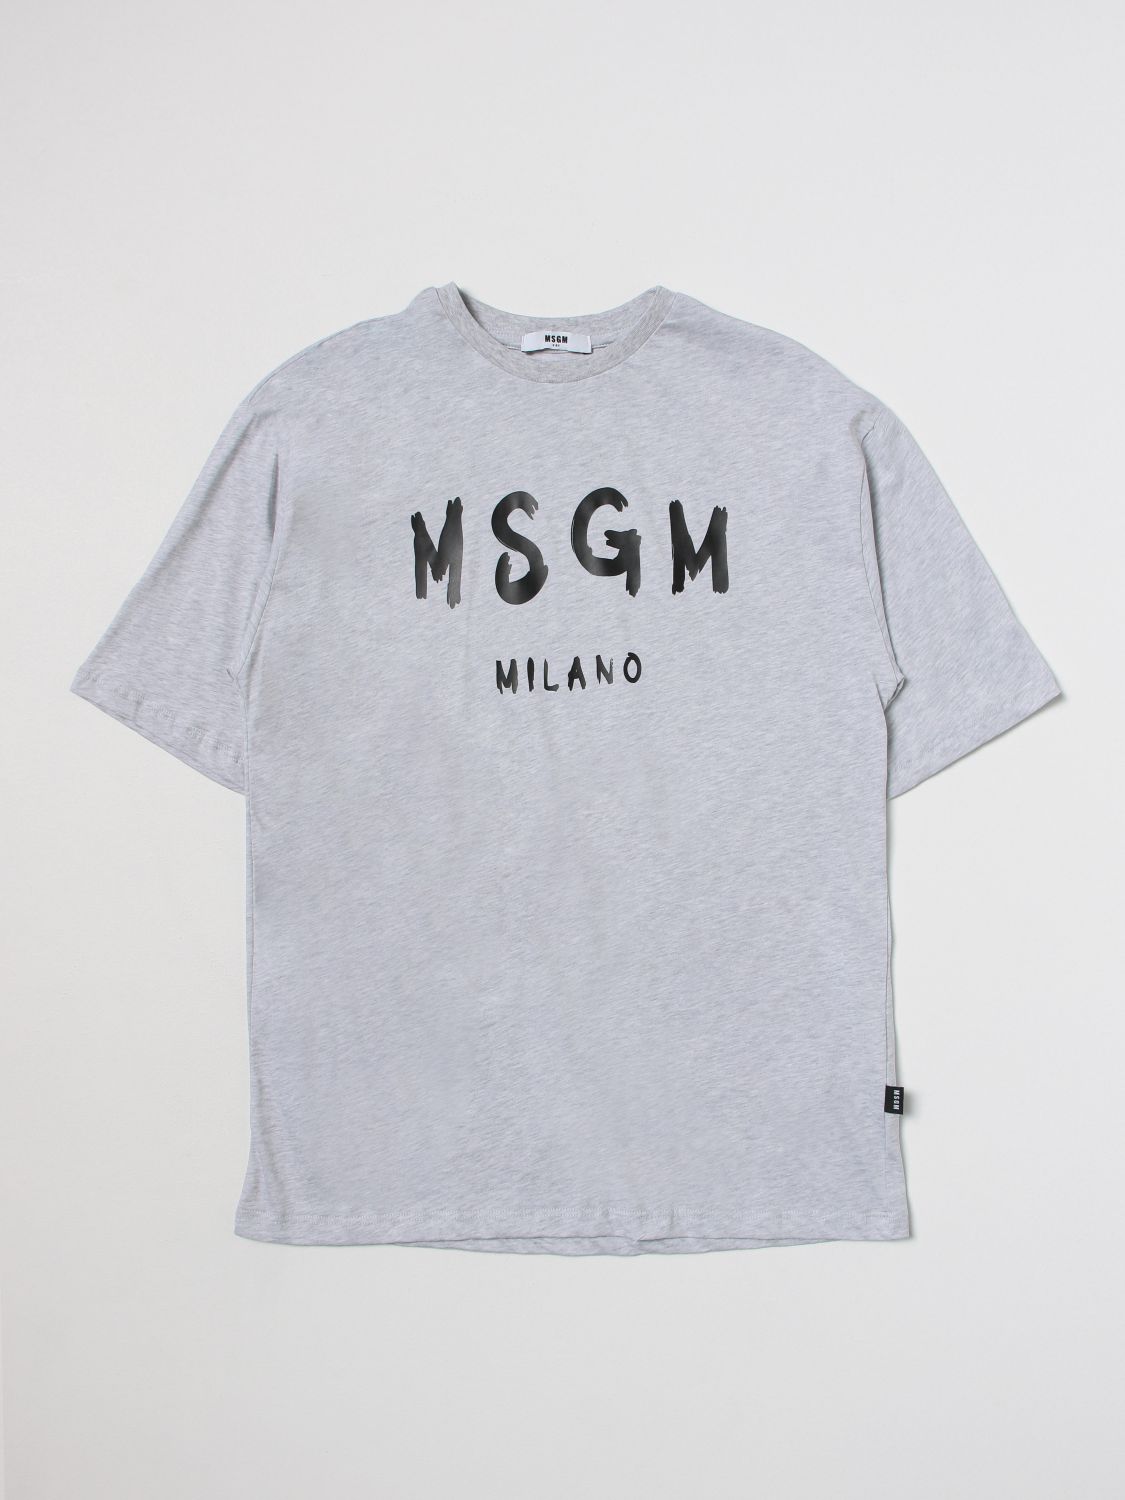 Msgm T-shirt  Kids Kids Color Grey